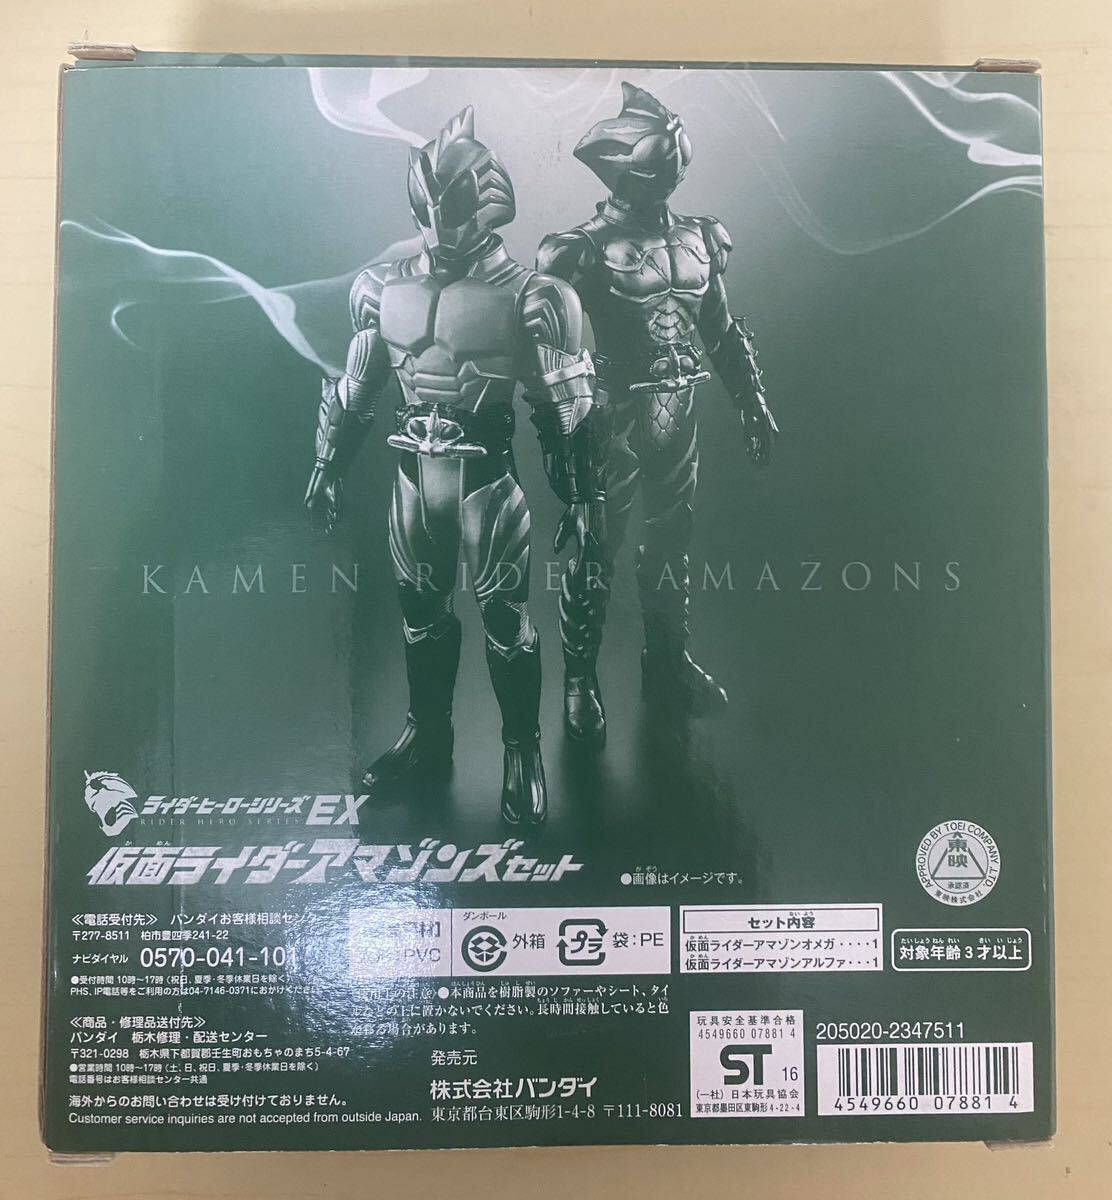 * rider hero series EX * Kamen Rider Amazon z Alpha & Omega postage 600 jpy 